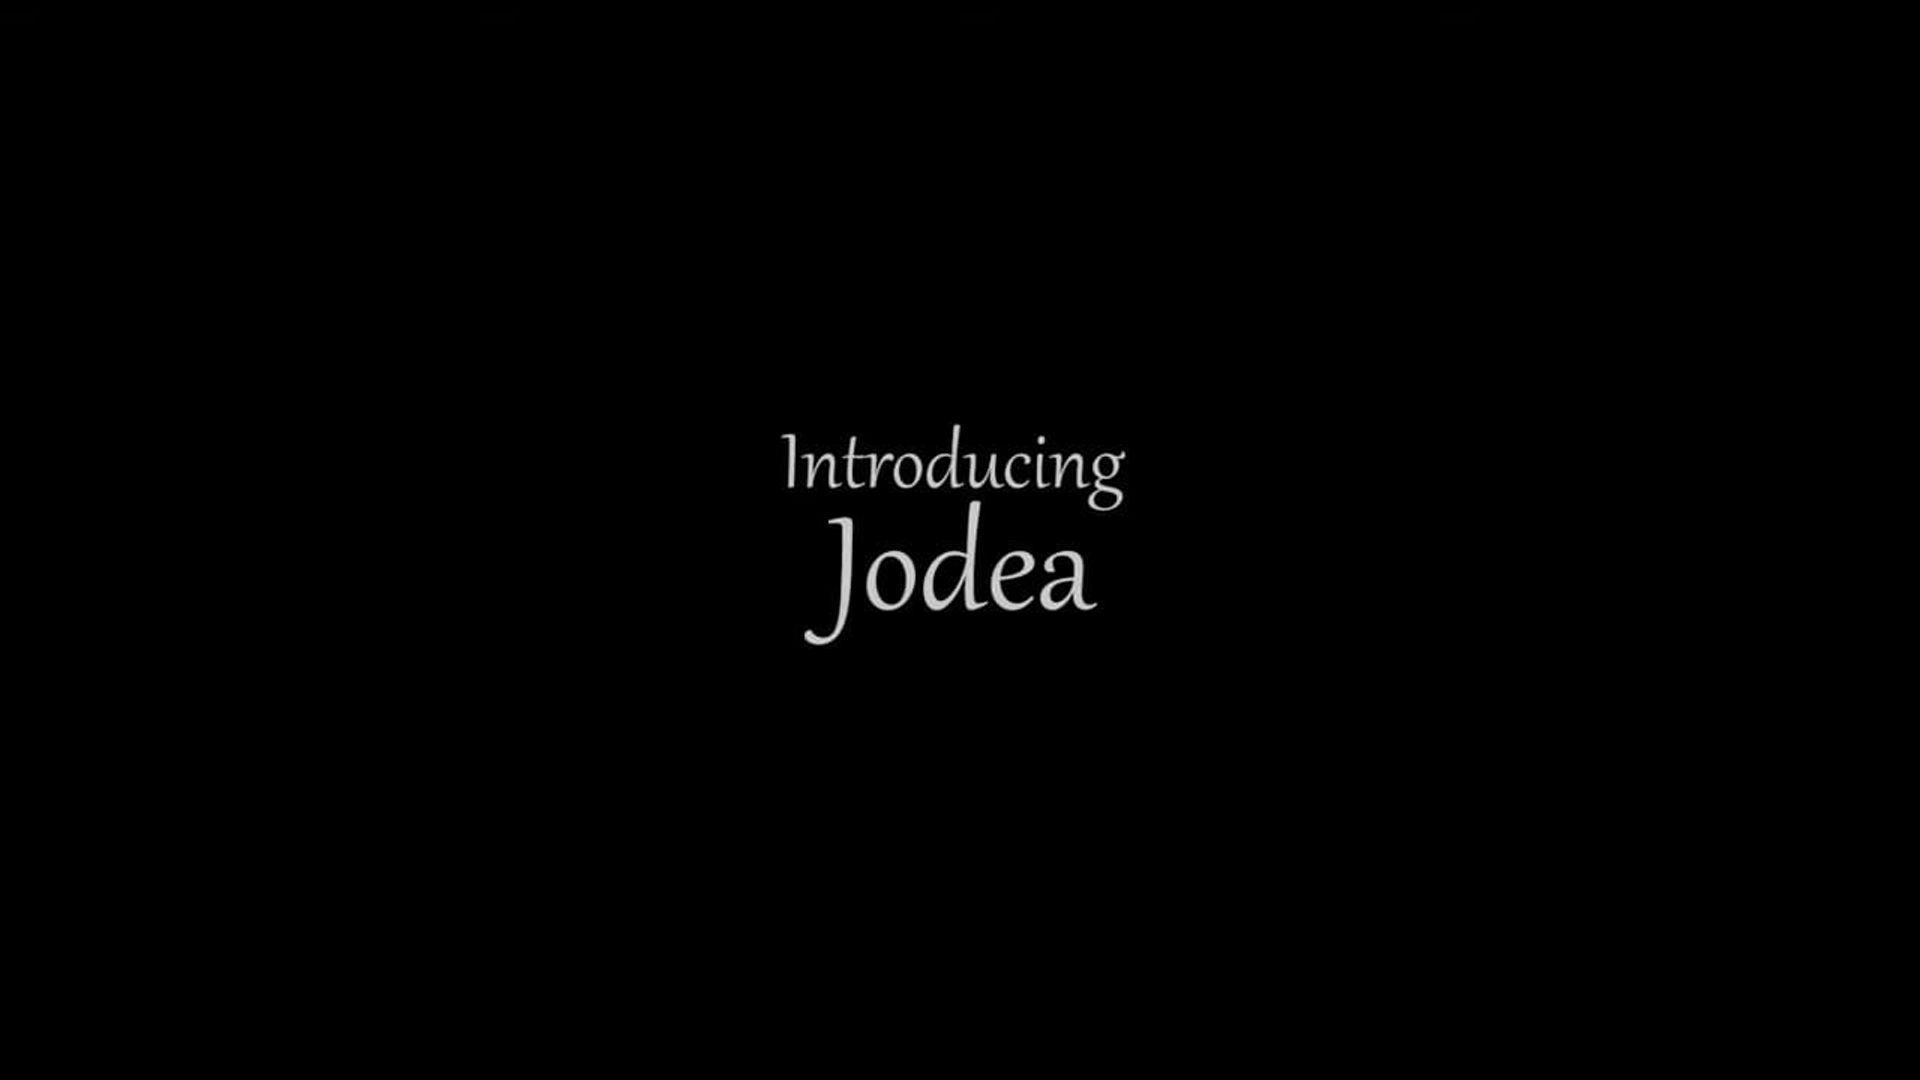 Introducing Jodea background